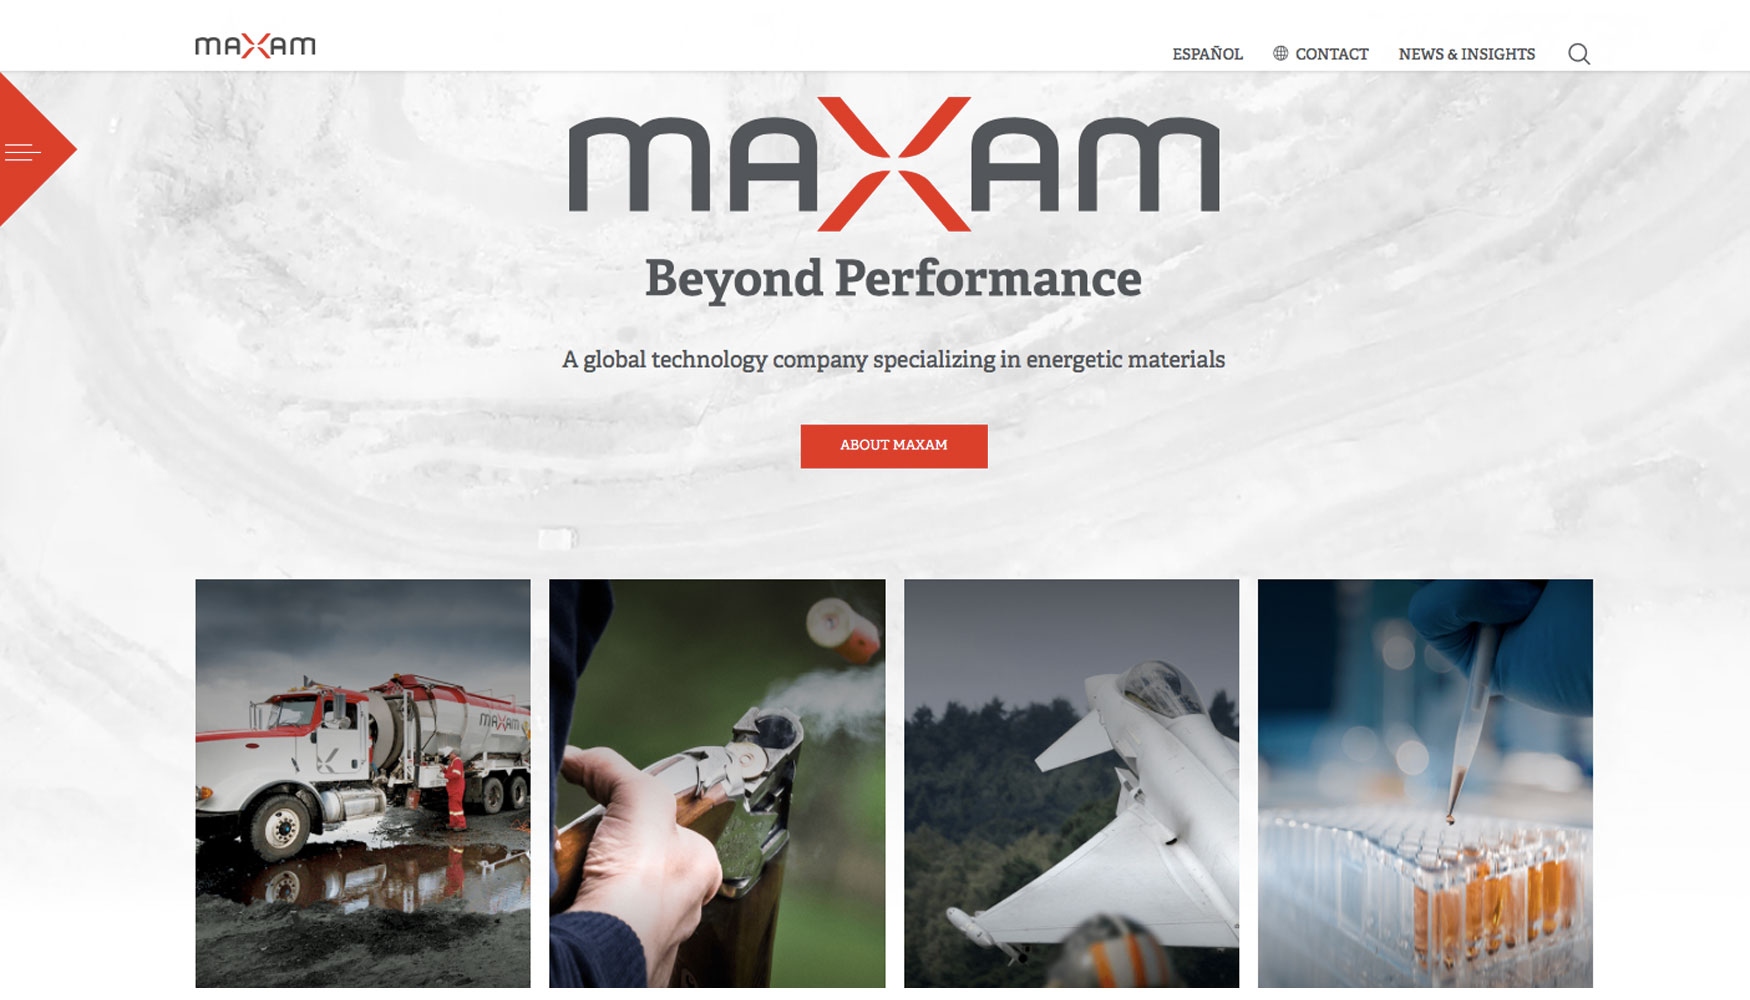 Nueva web corporativa de Maxam